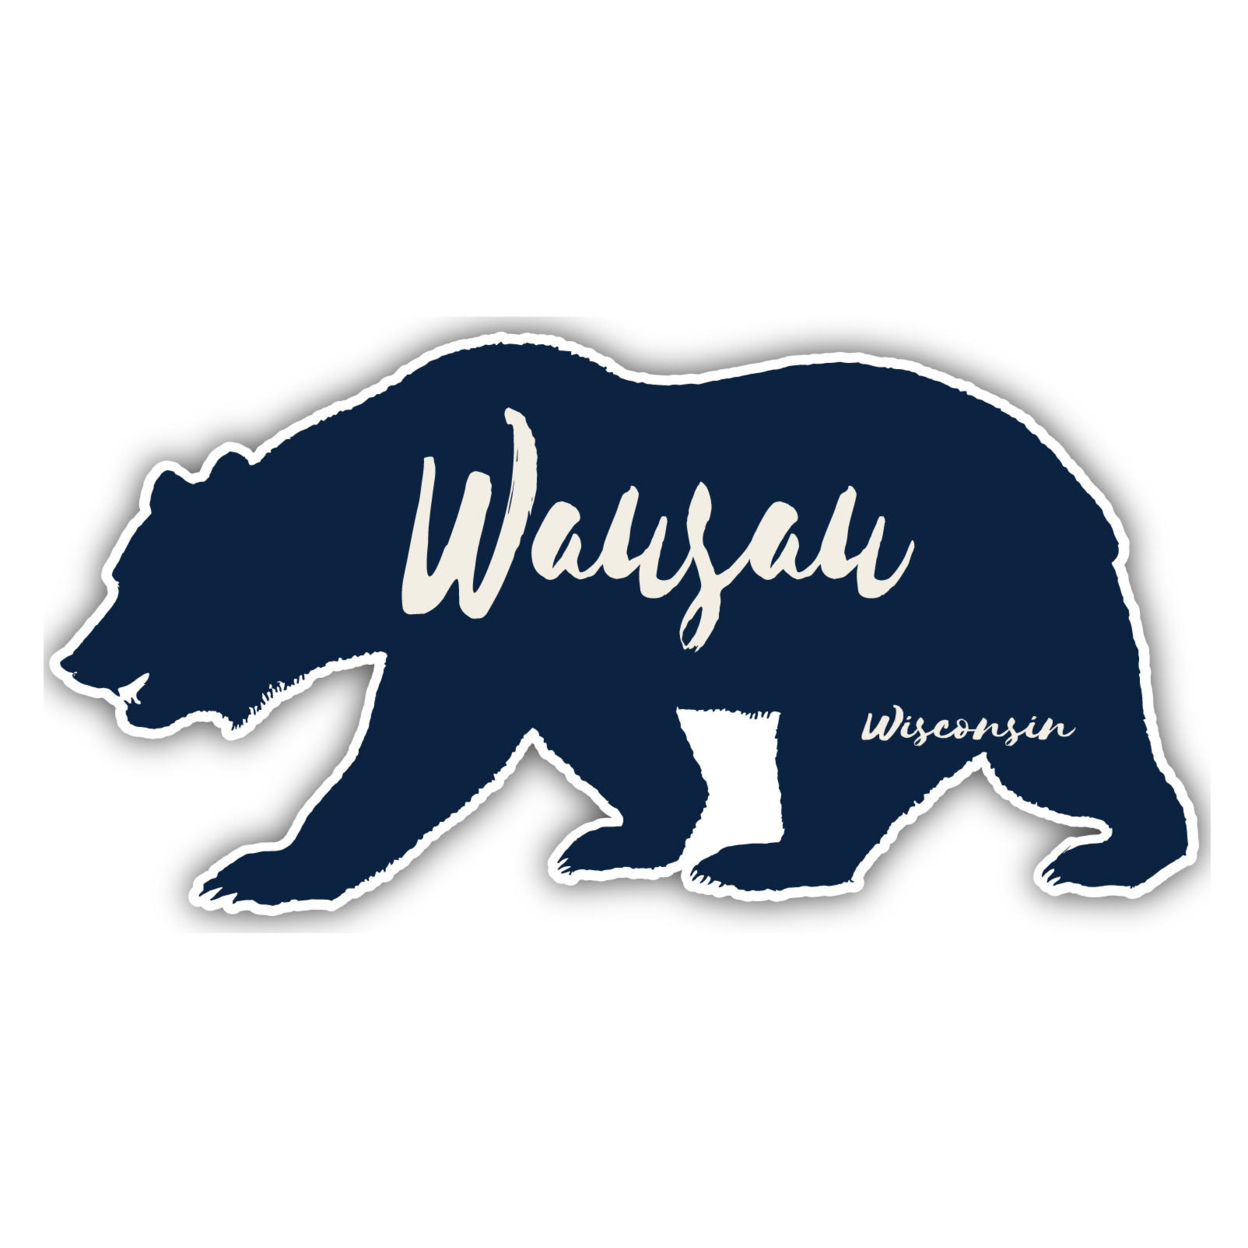 Wausau Wisconsin Souvenir Decorative Stickers (Choose Theme And Size) - Single Unit, 4-Inch, Bear